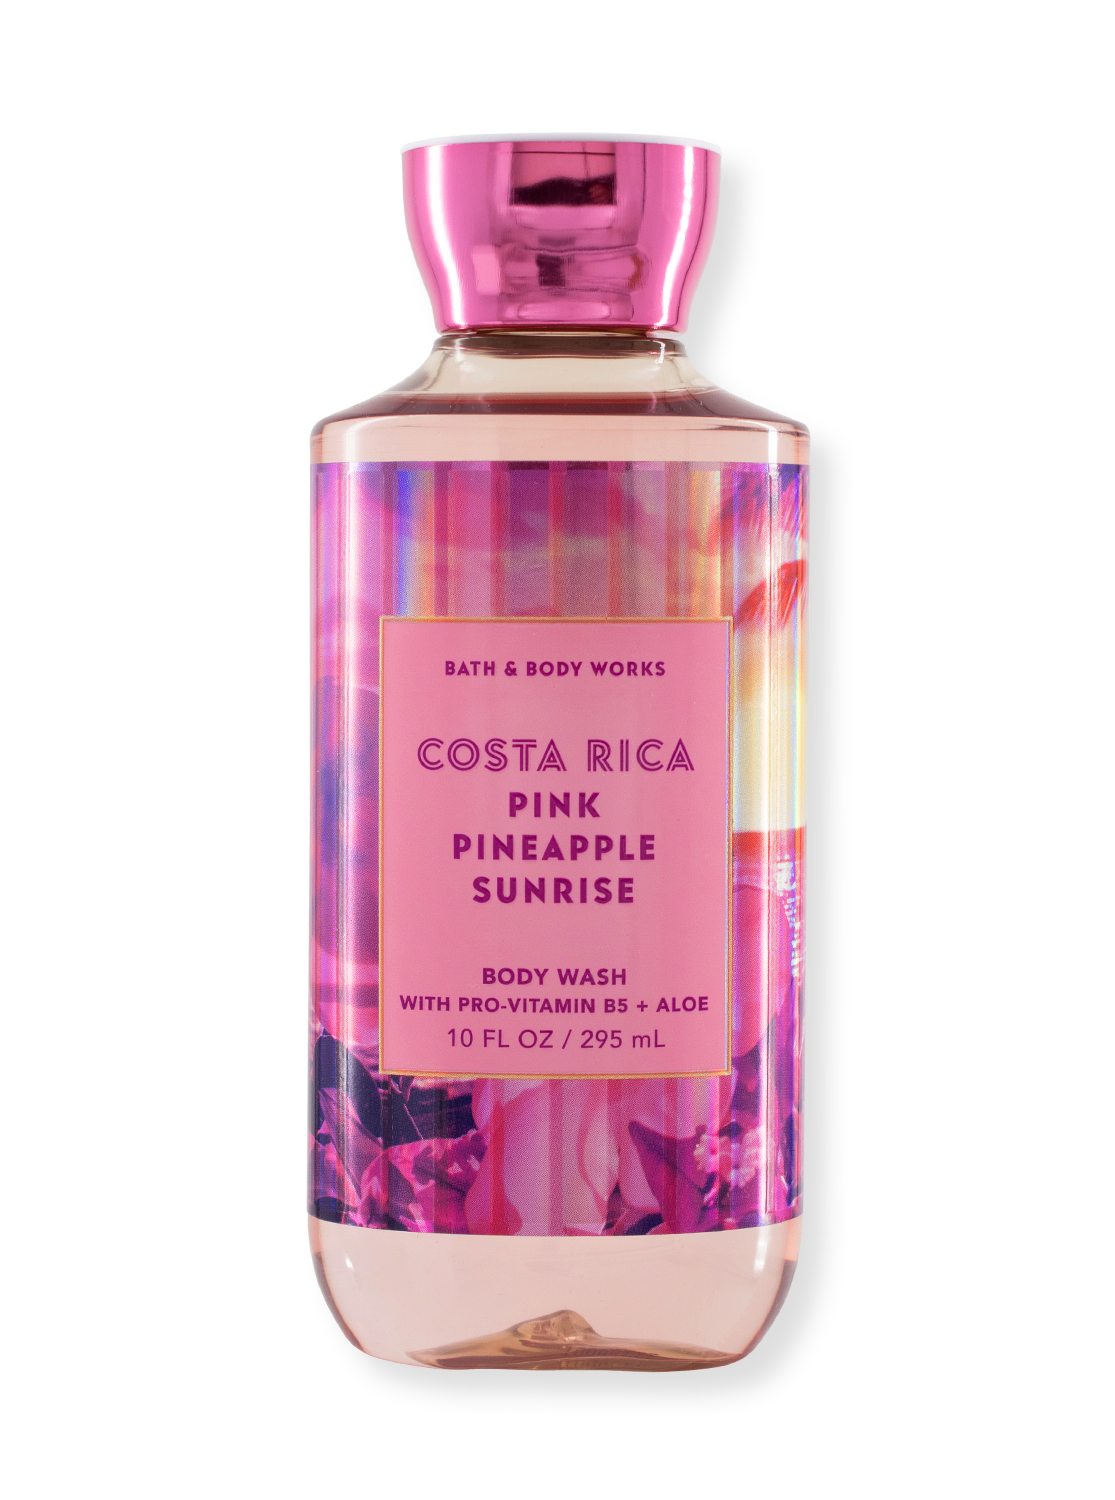 Gel de douche / lavage du corps - Costa Rica - Sunrise à l'ananas rose - 295 ml